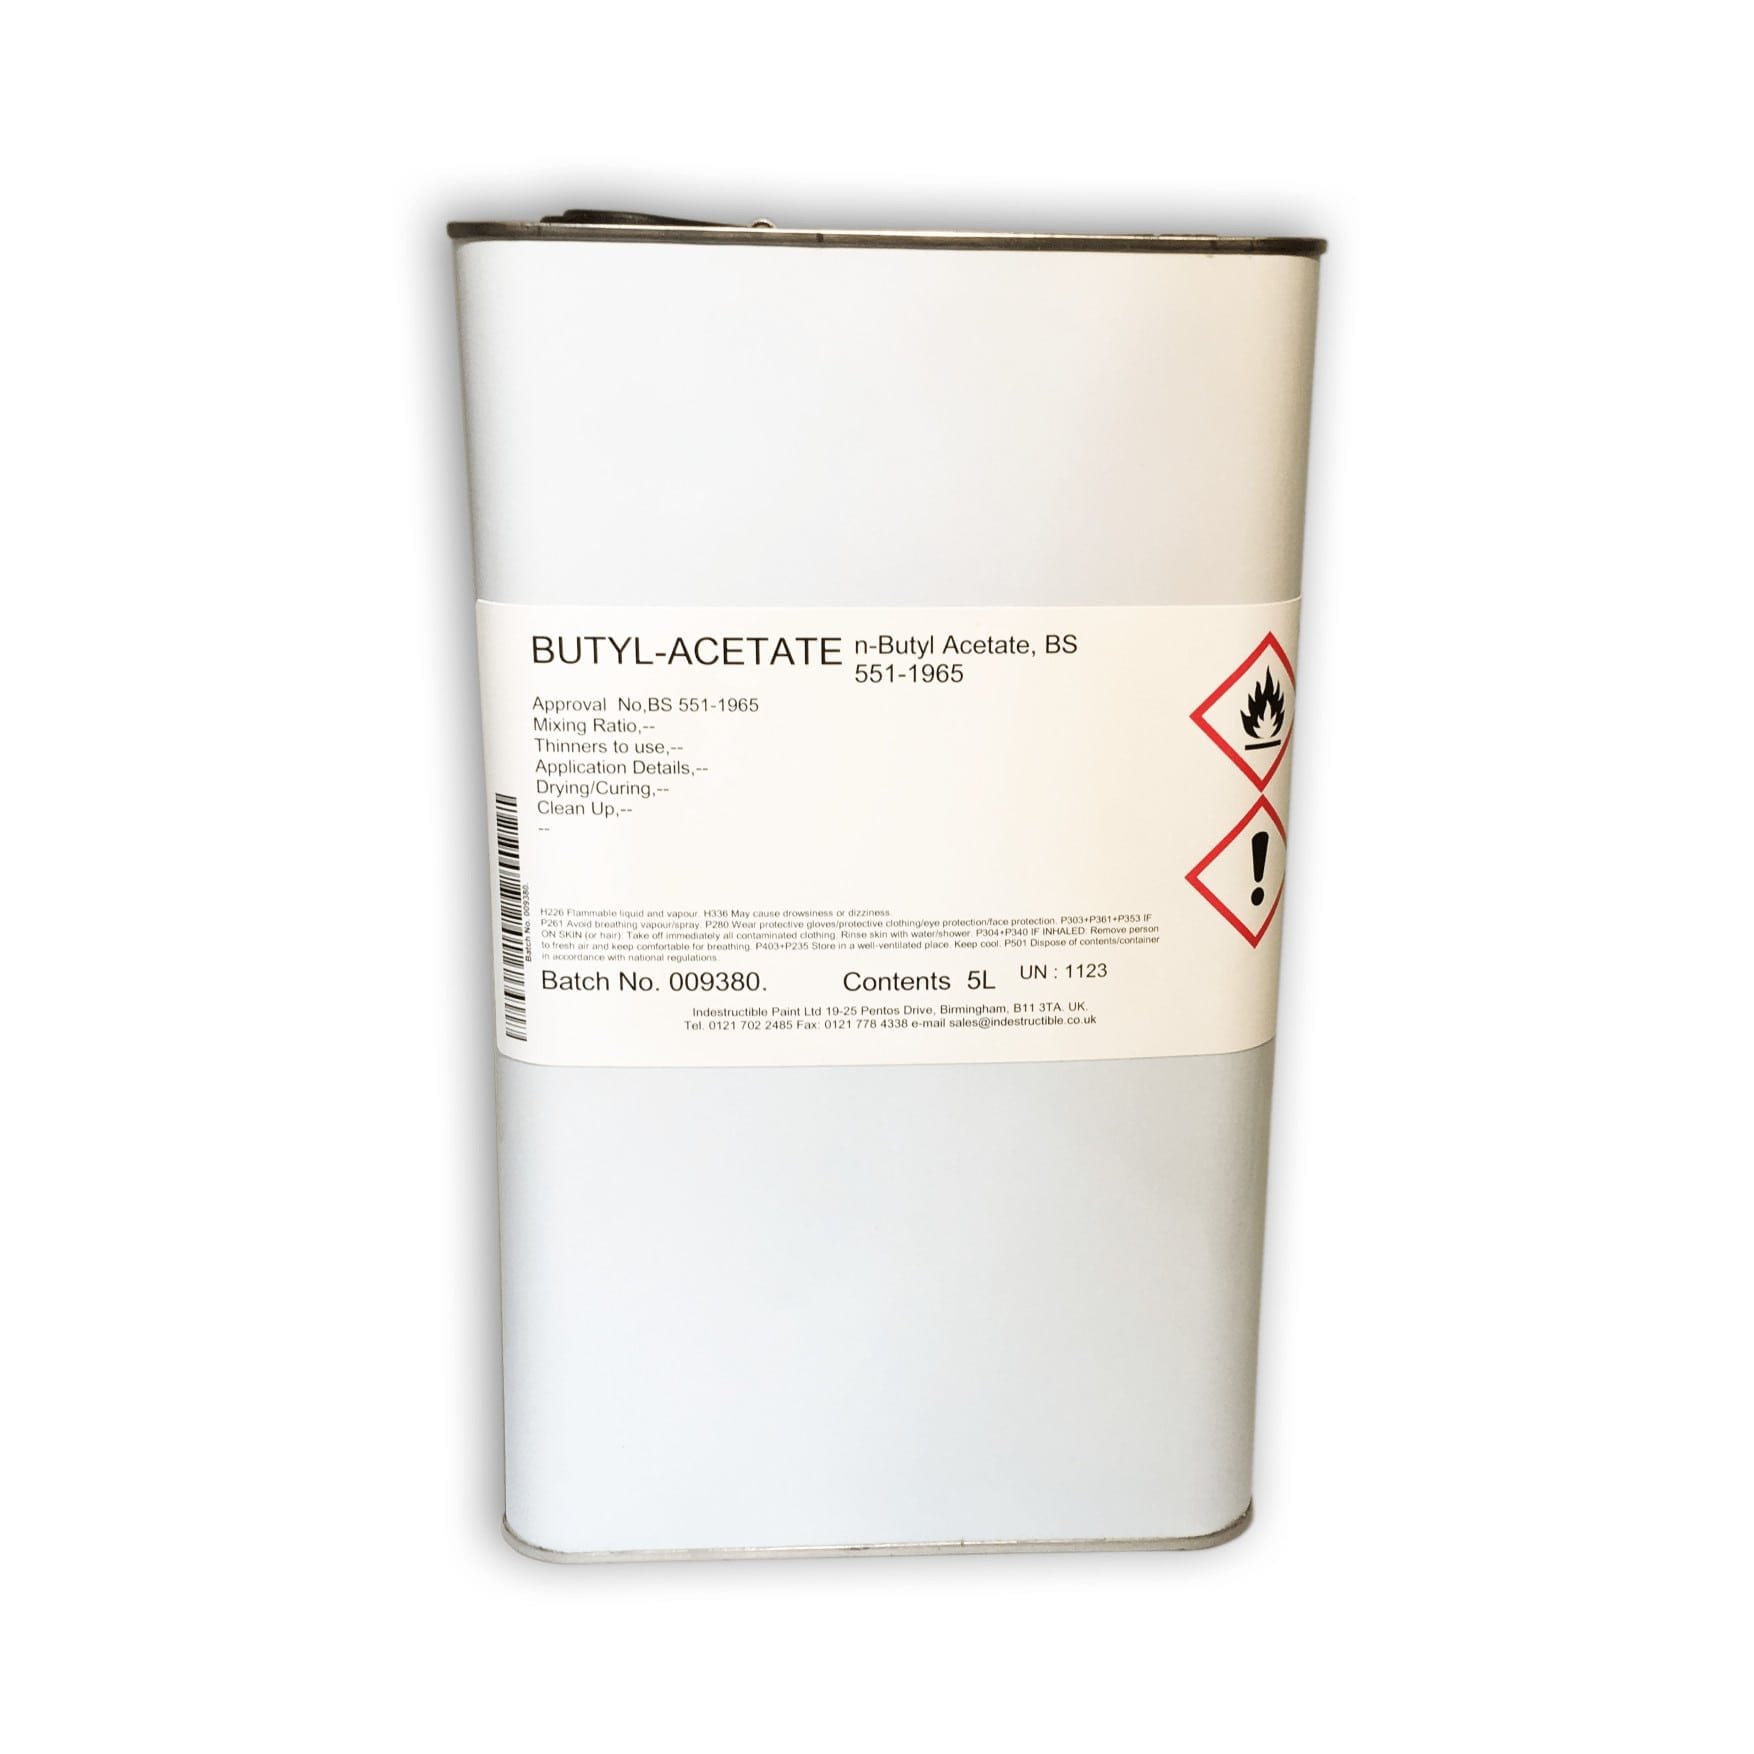 BUTYL-ACETATE N-Butyl Acetate Bss551 - 1965